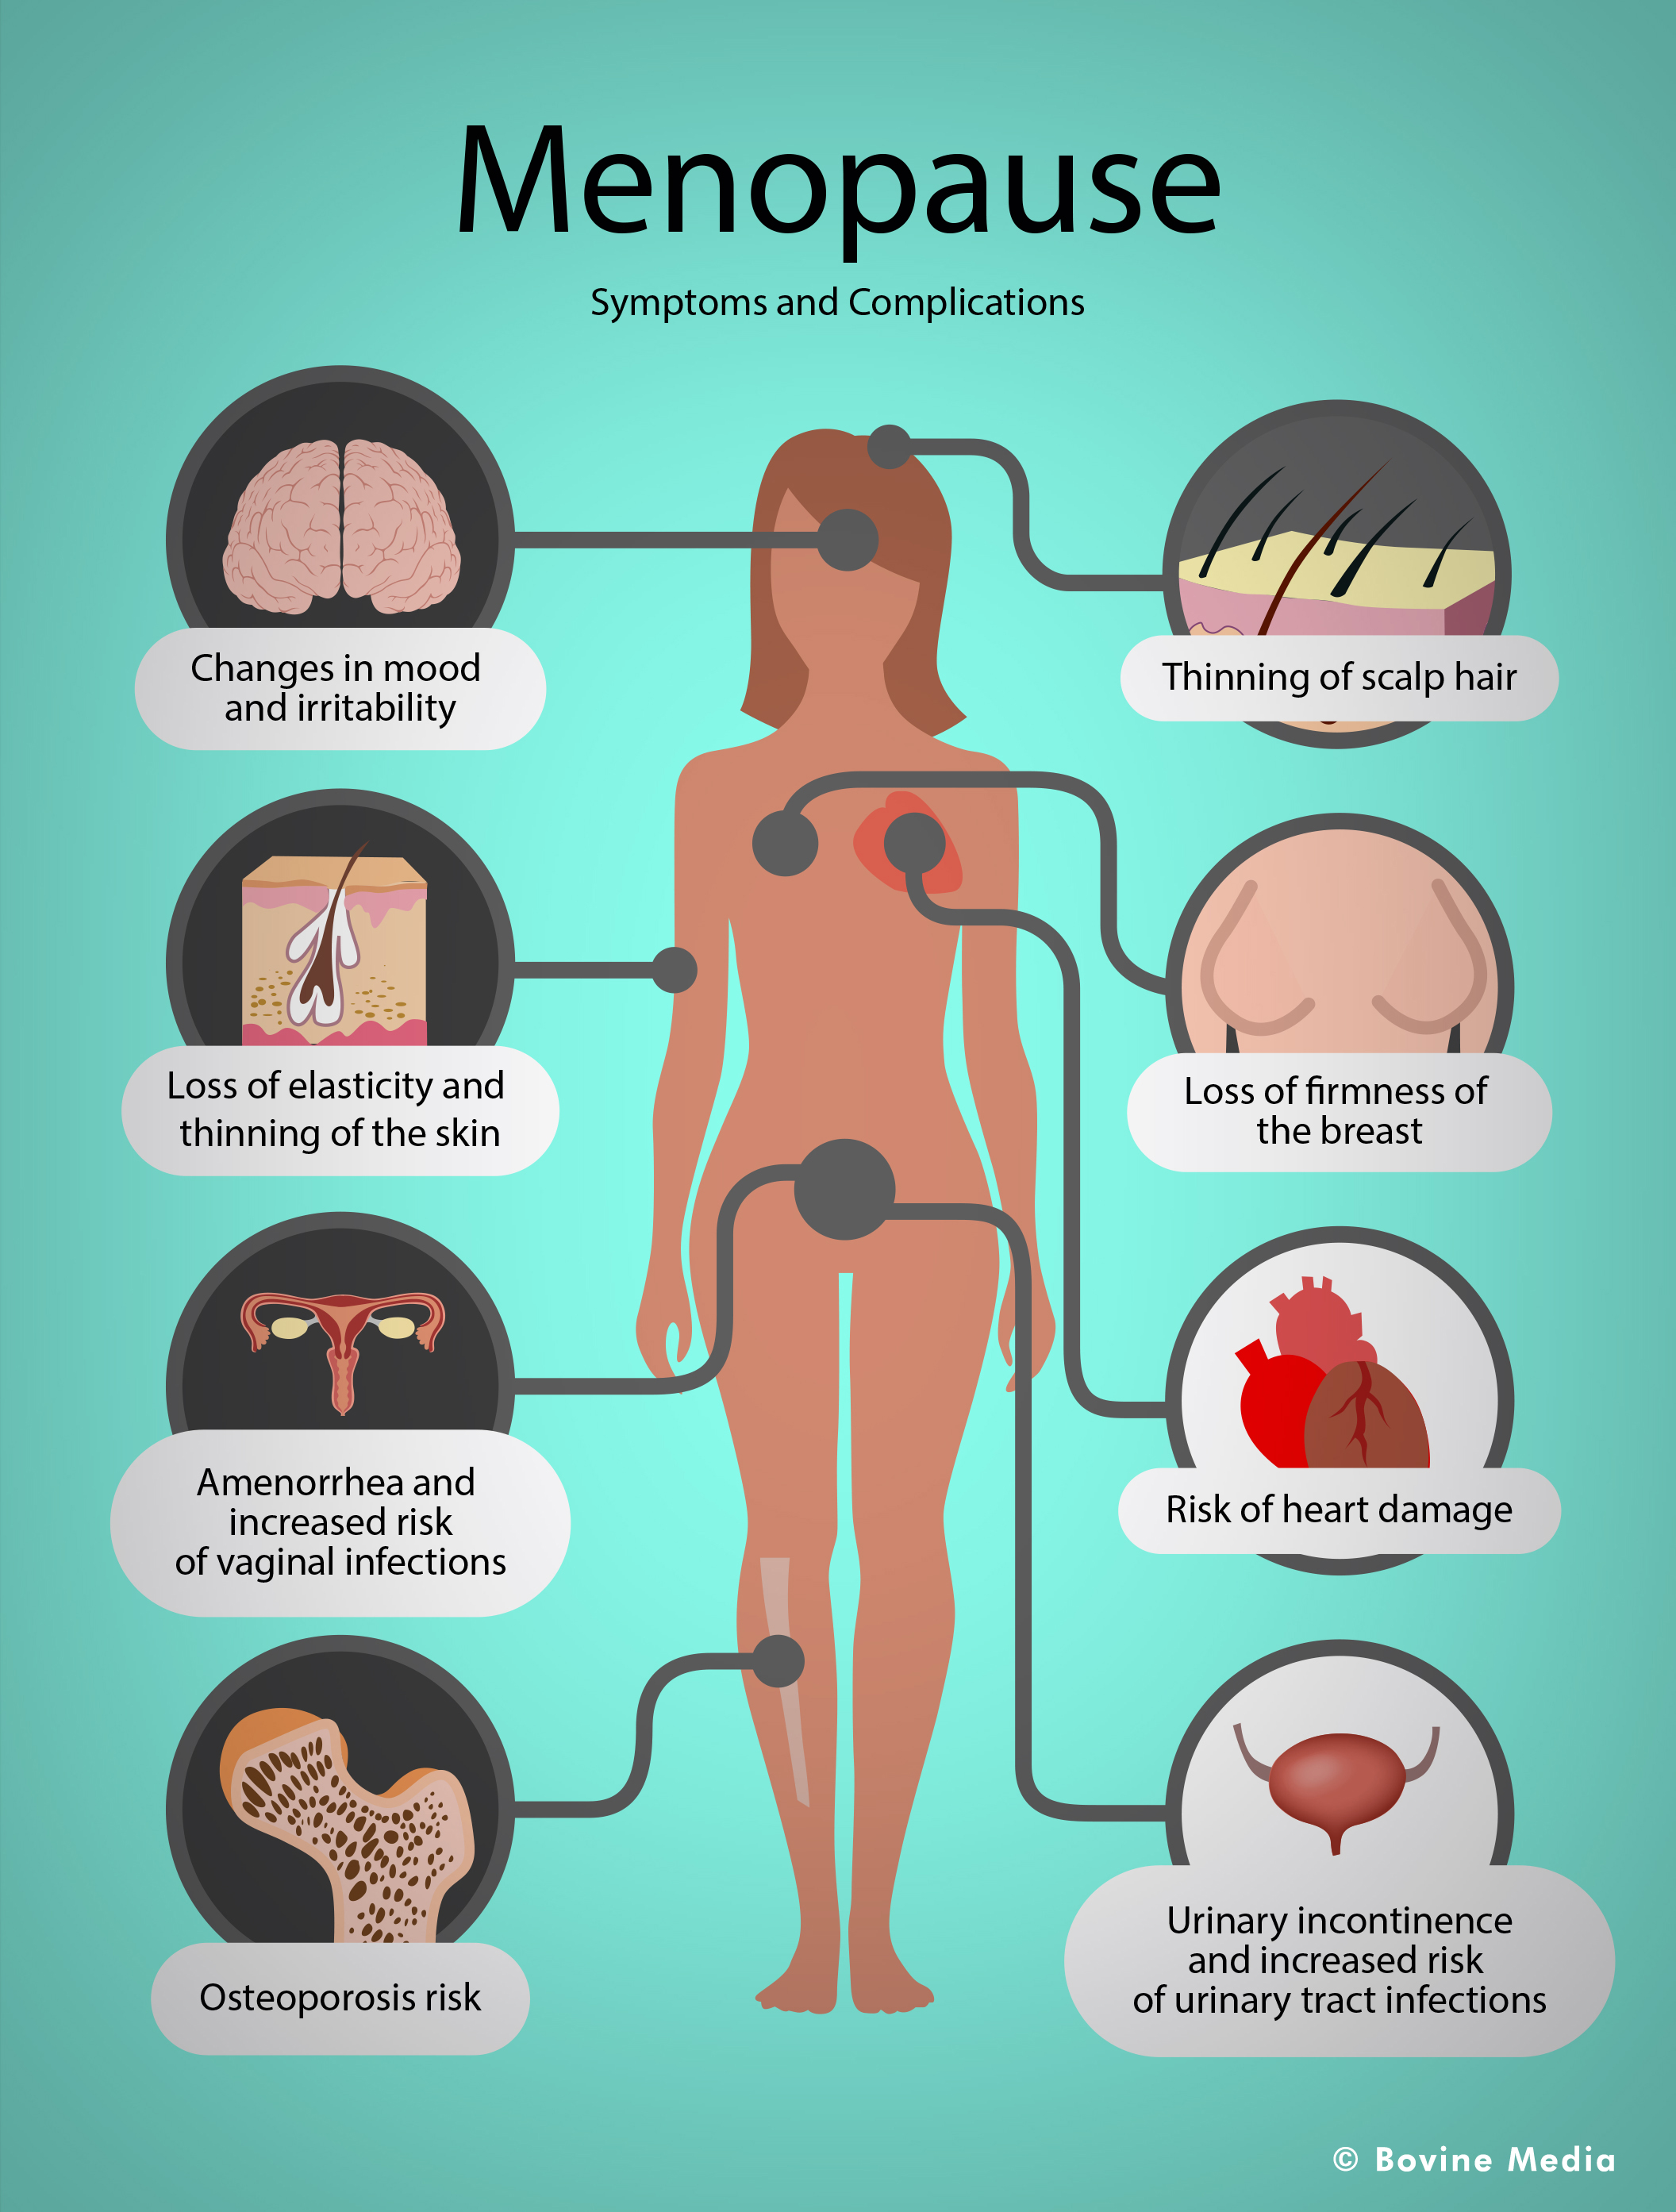 Menopause Signs And Symptoms - Diagnosis